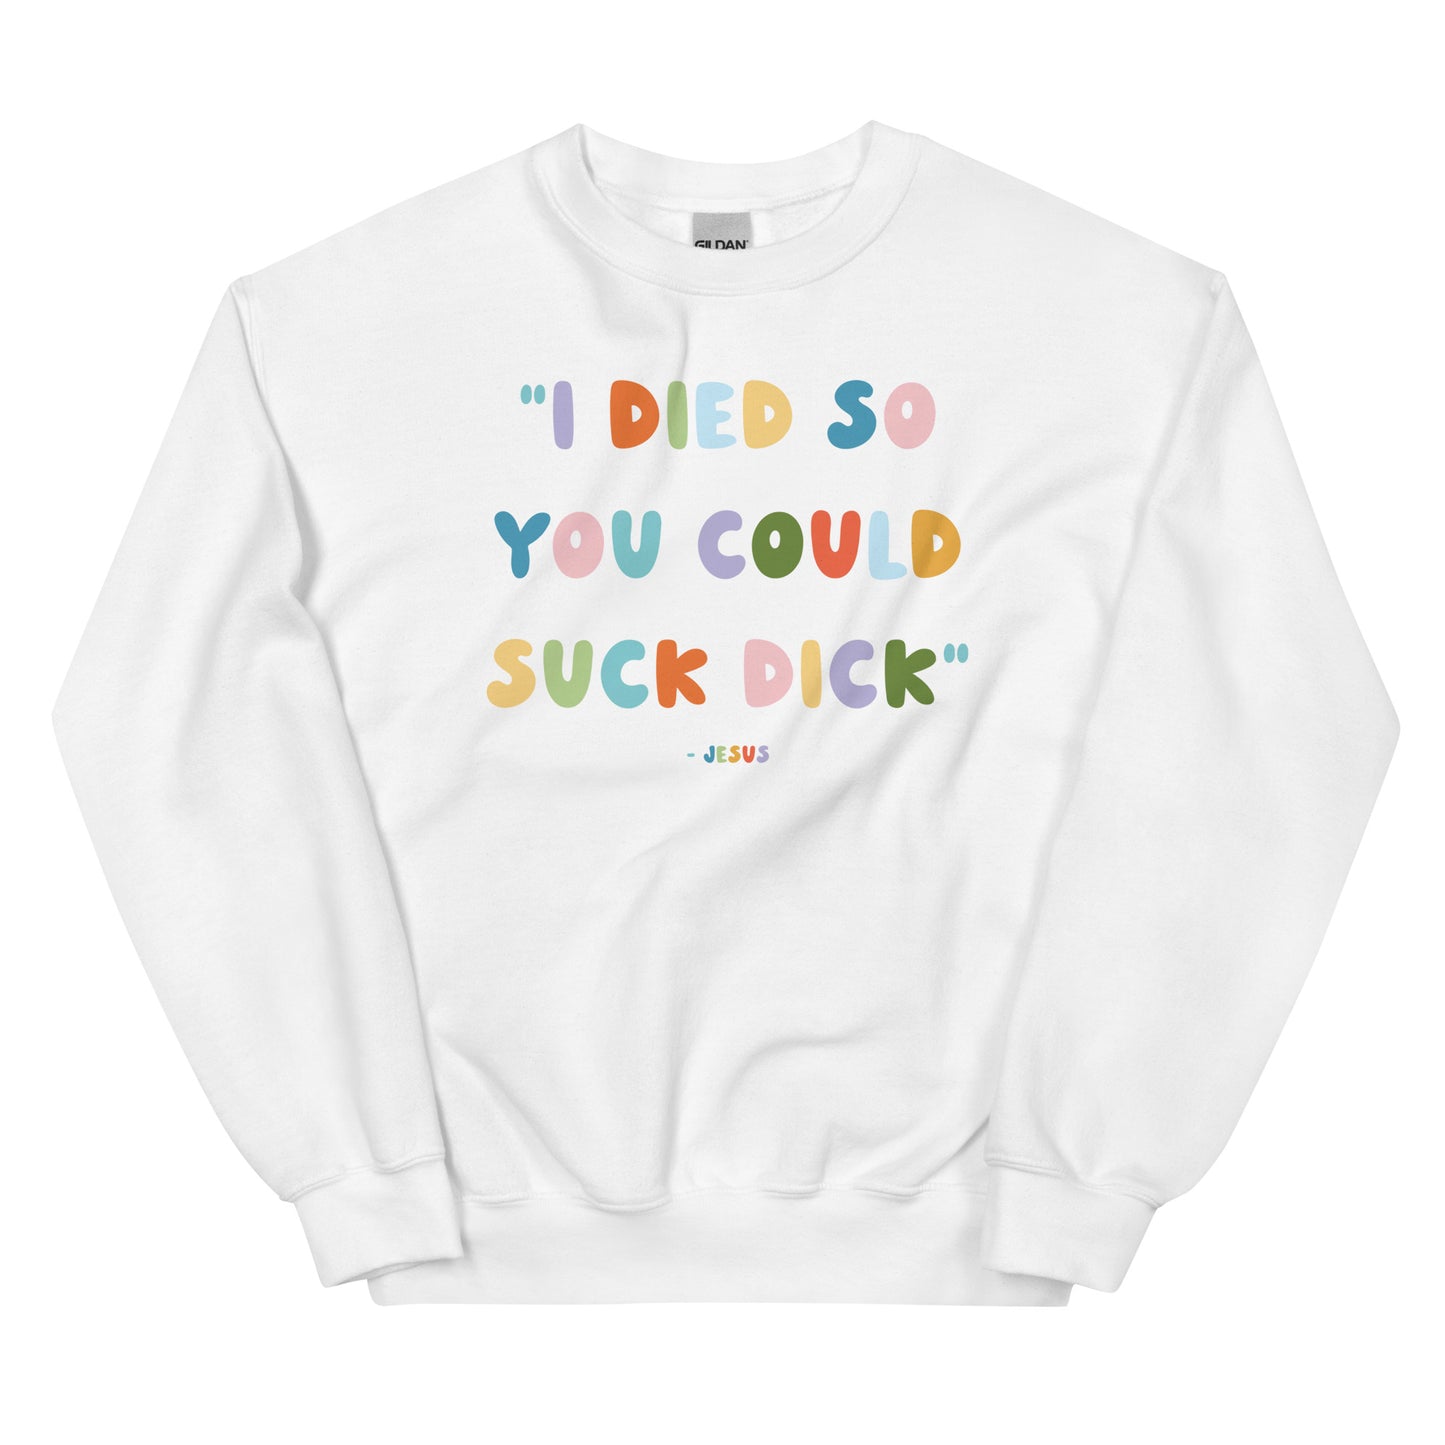 Jesus Died So You Could Suck Dick Unisex Sweatshirt